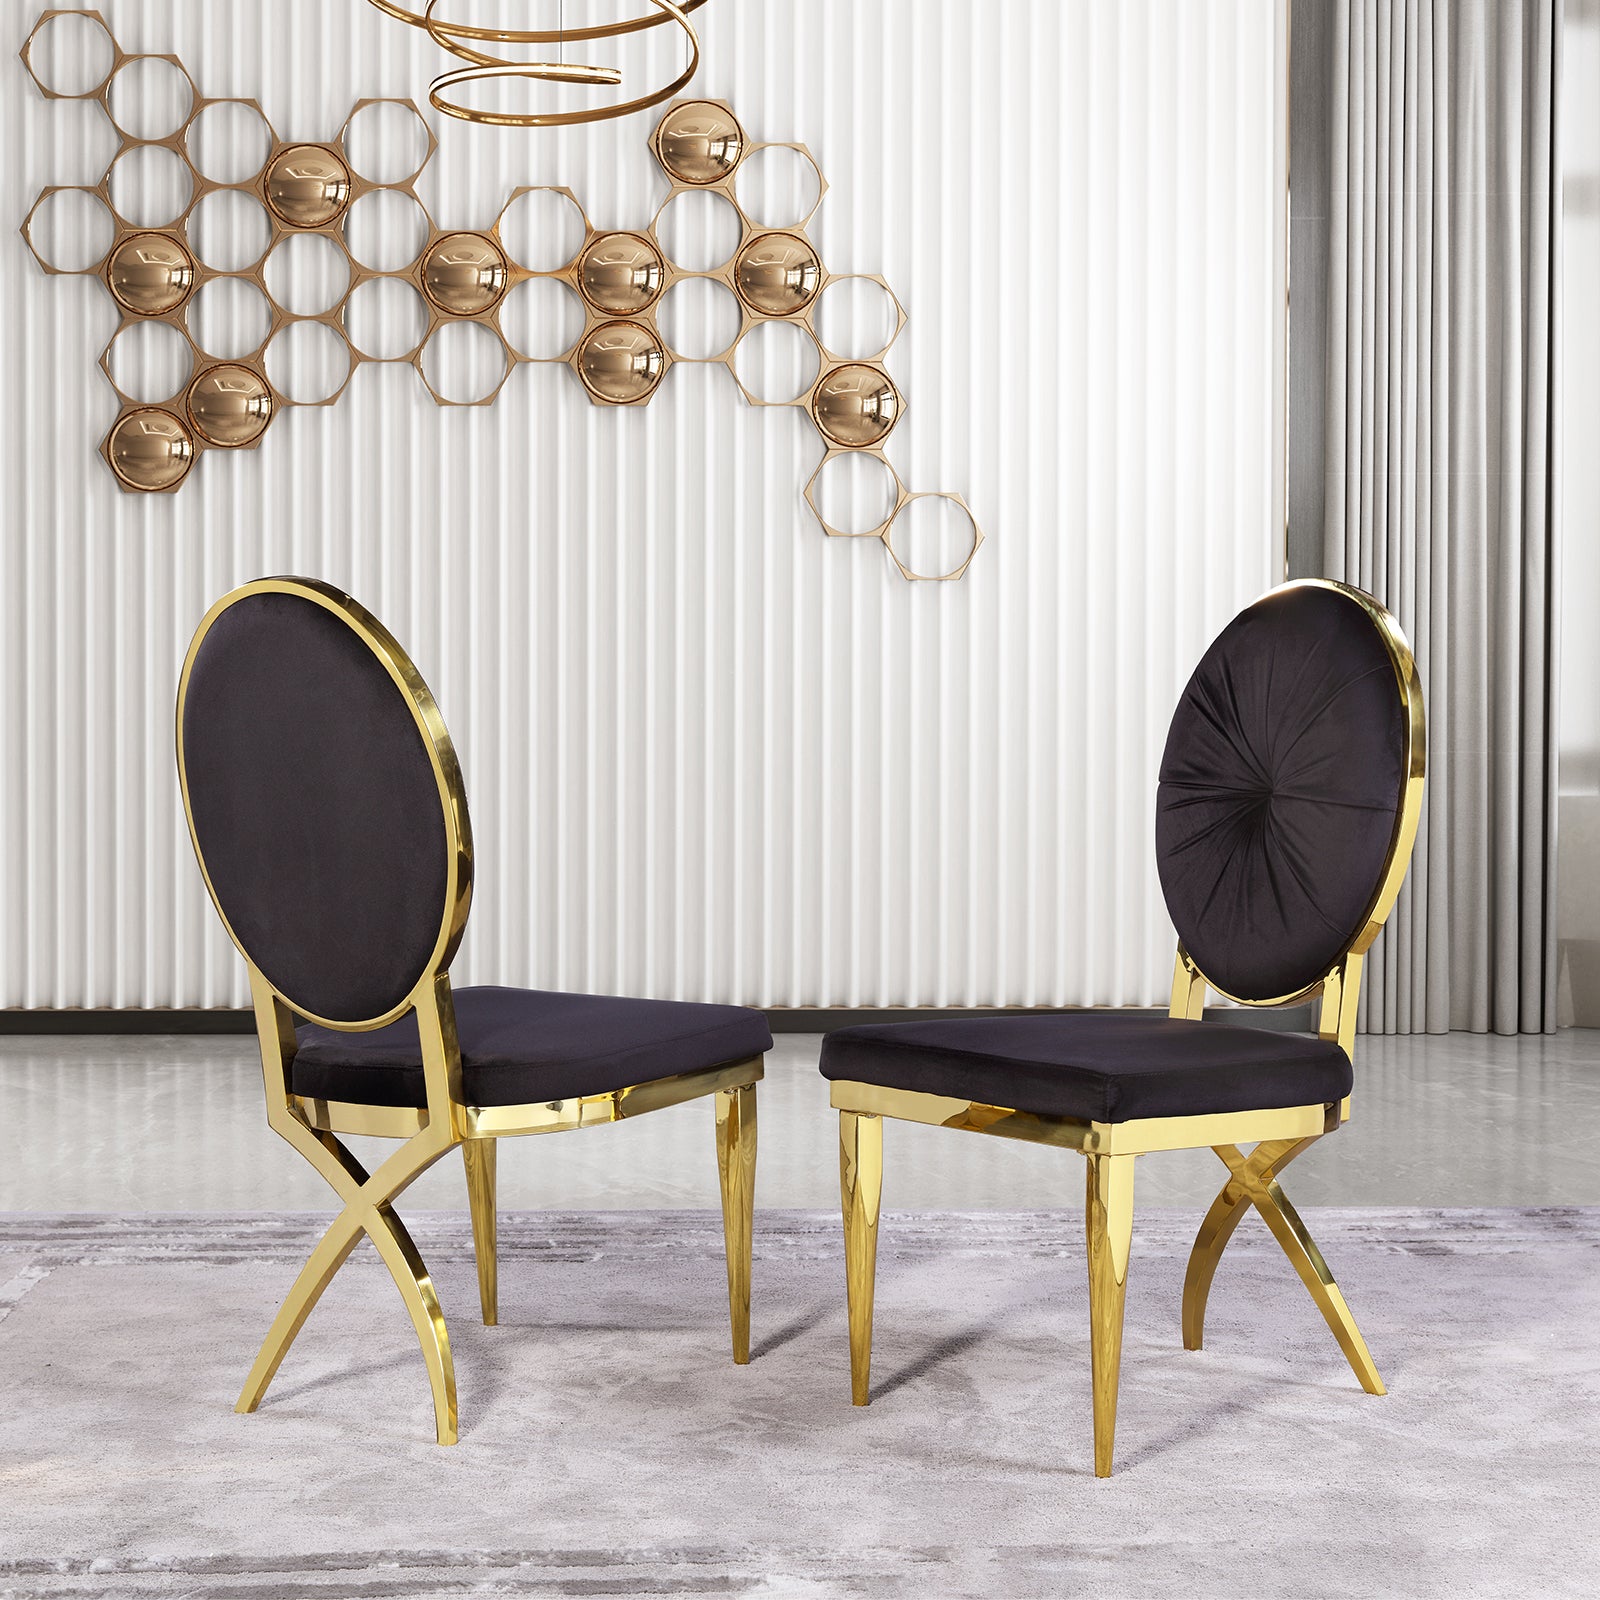 629-Set | AUZ Black and Gold Dining room Sets for 6